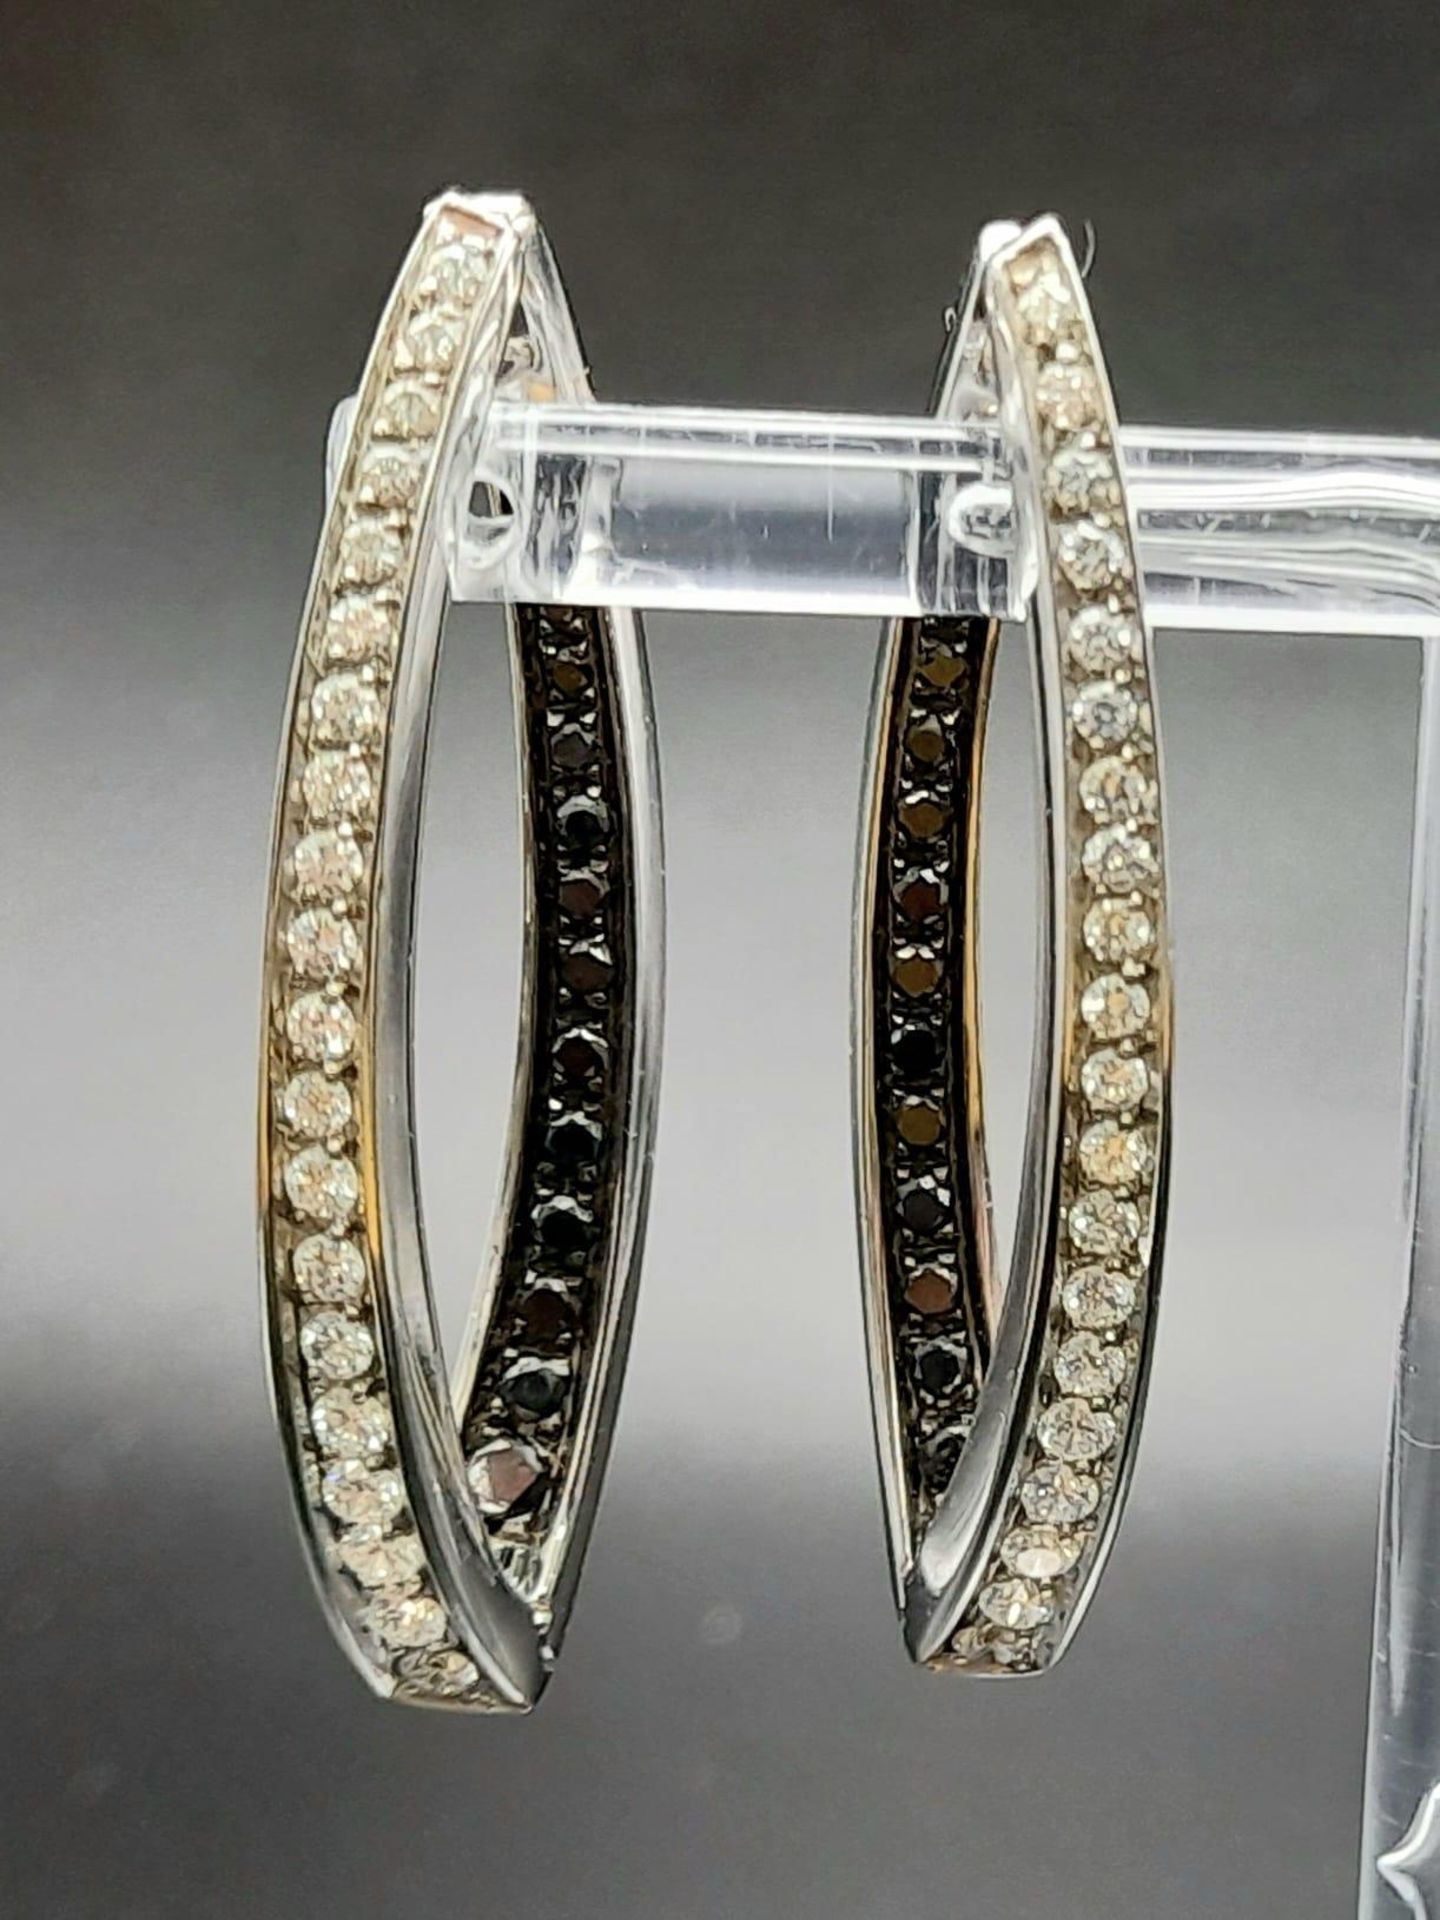 A Pair of Designer Palmiero 18K White Gold, Black and White Diamond Elongated Hoop Earrings. 0.